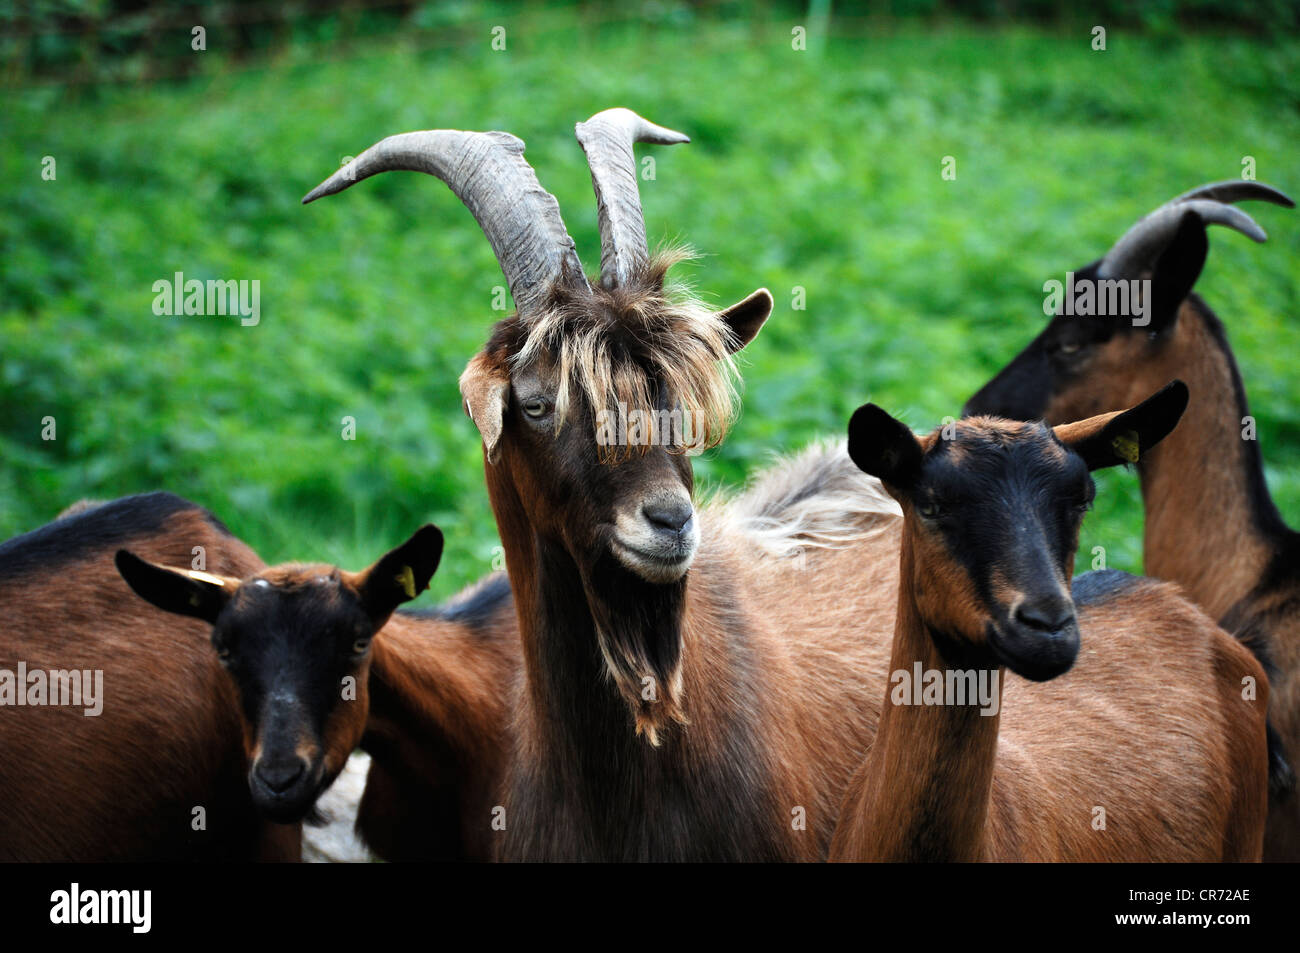 Billy goat, cross of a Thuringian goat and a Bunte Deutsche Edelziege breed, left, and Bunte Deutsche Edelziege goat, right Stock Photo